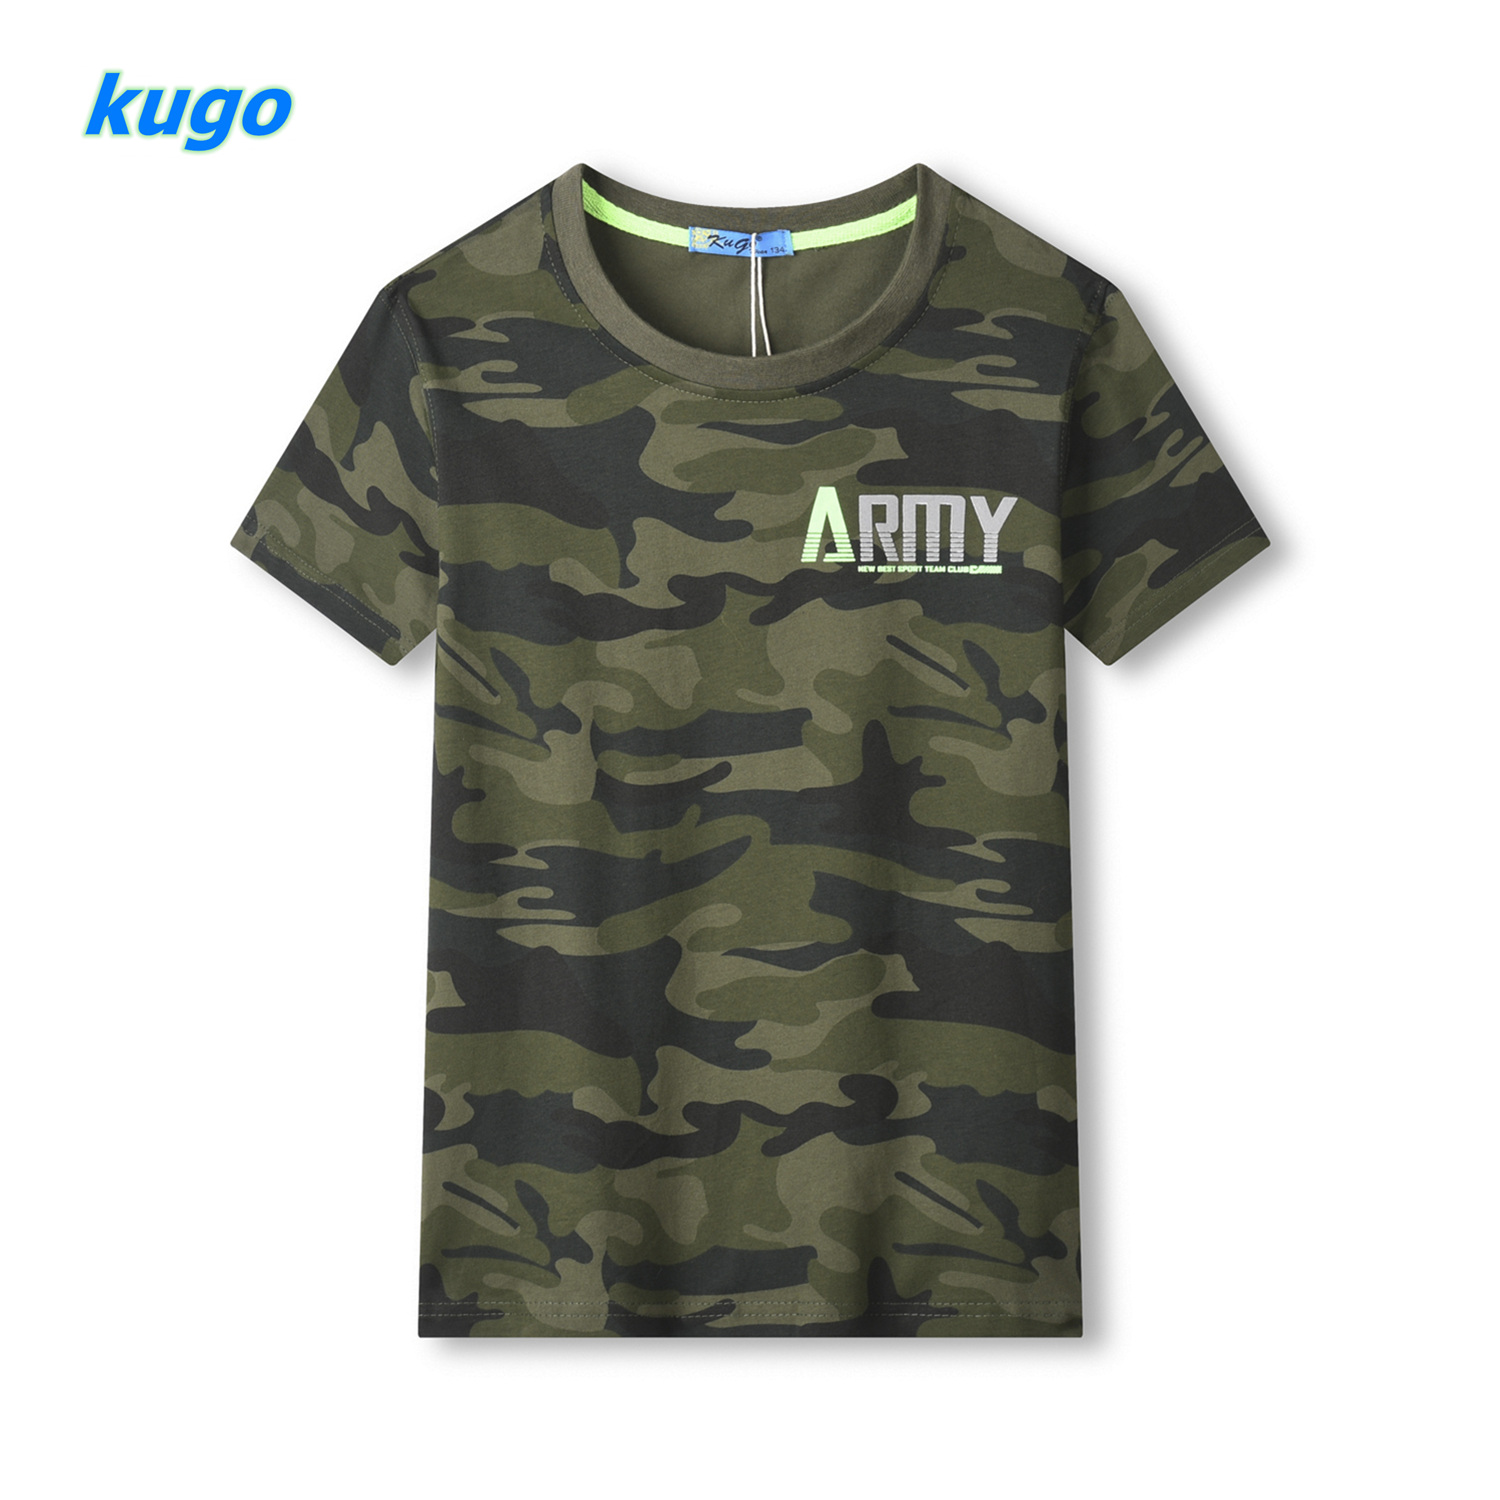 Chlapecké triko - KUGO TM9218, khaki/ tyrkysová aplikace Barva: Khaki, Velikost: 146